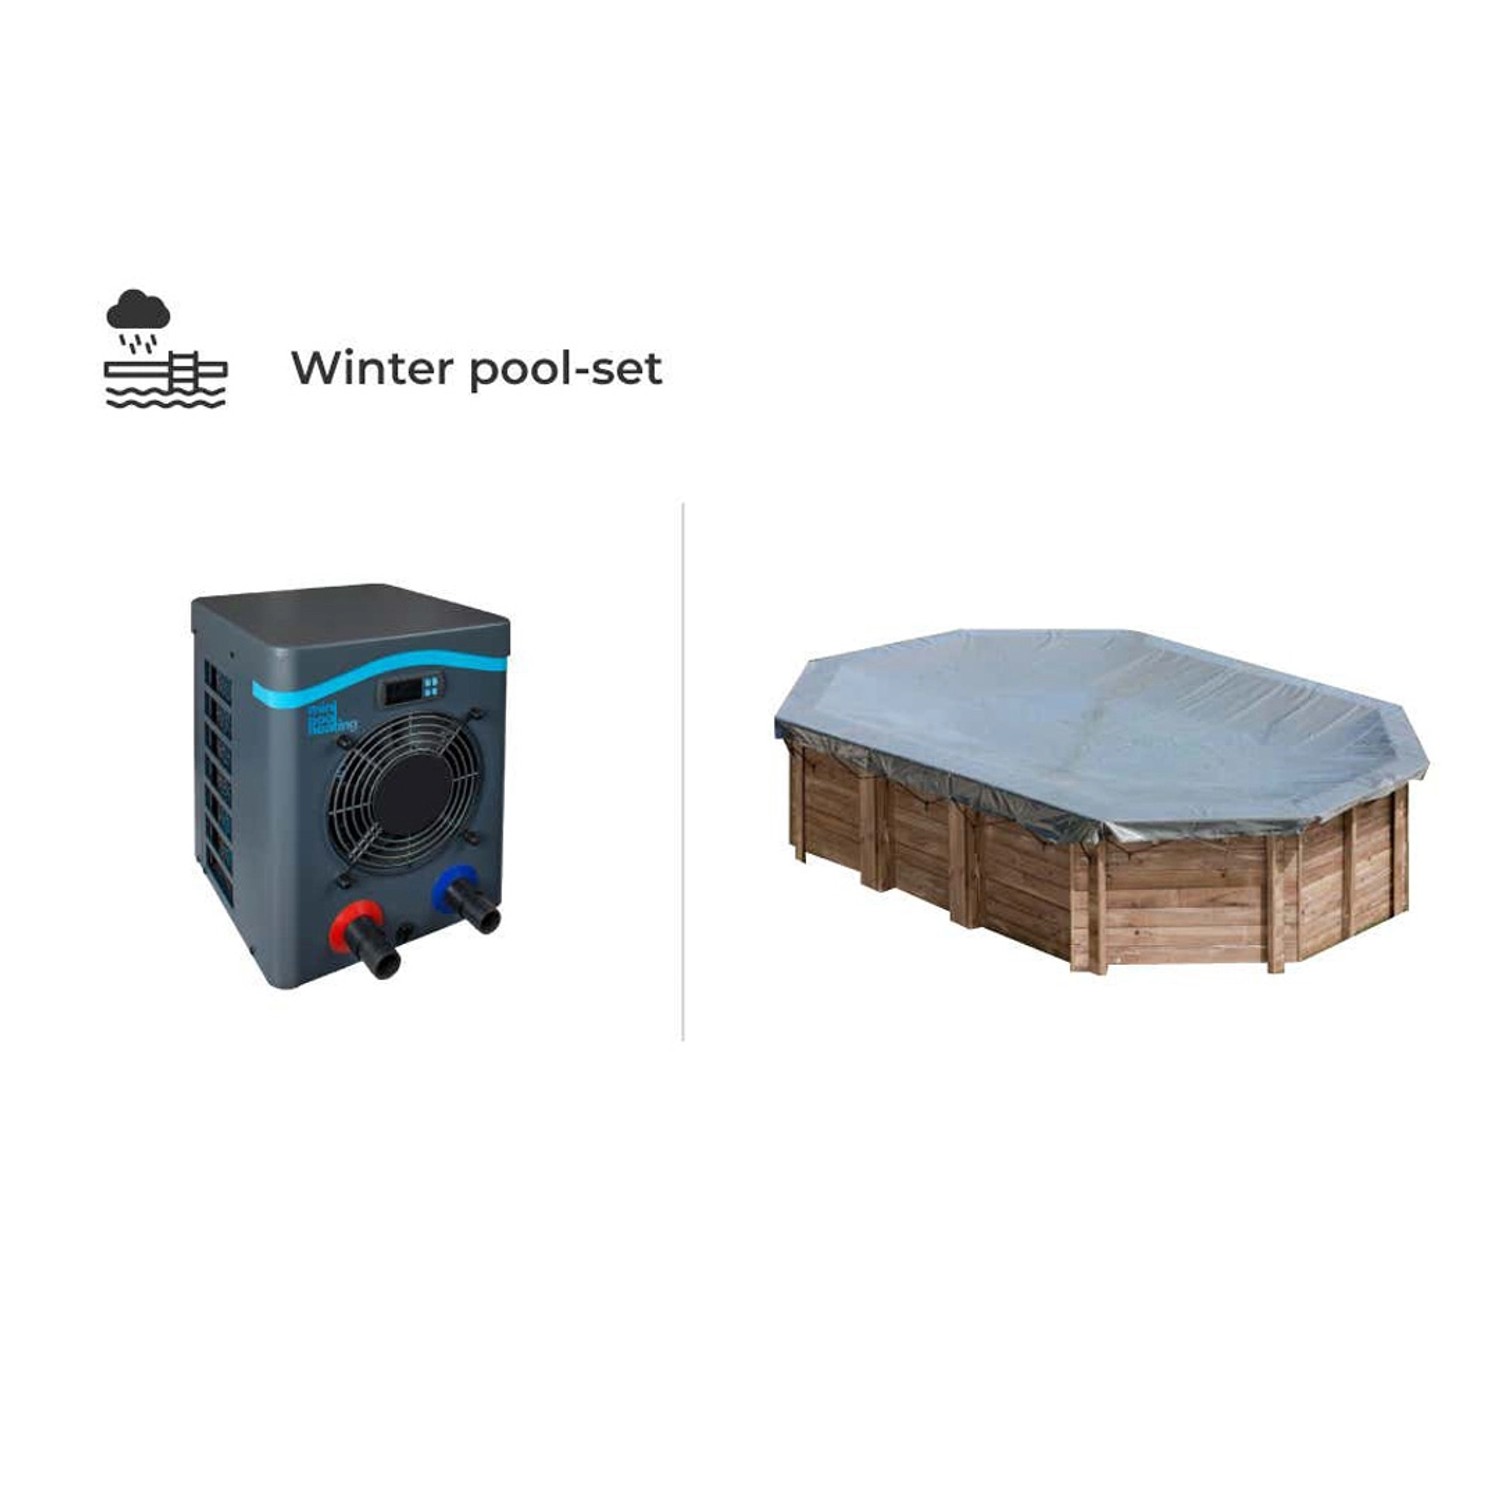 Poolcrew Winter-Pool-Set Rhodos Wärmepumpe mit Abdeckplane von Poolcrew